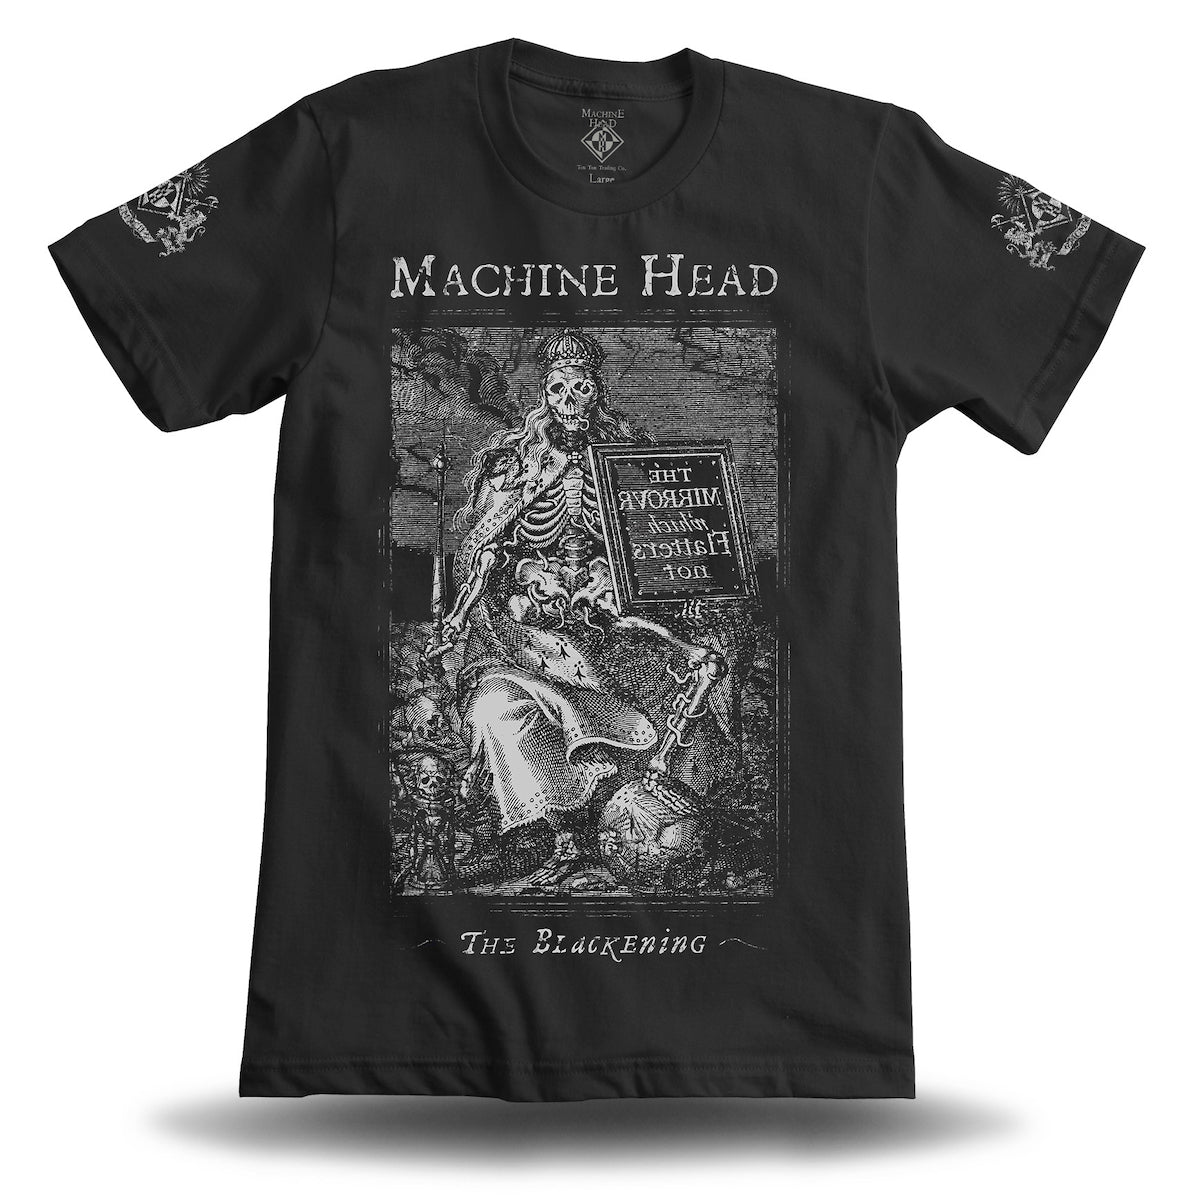 machine head australian tour 2023